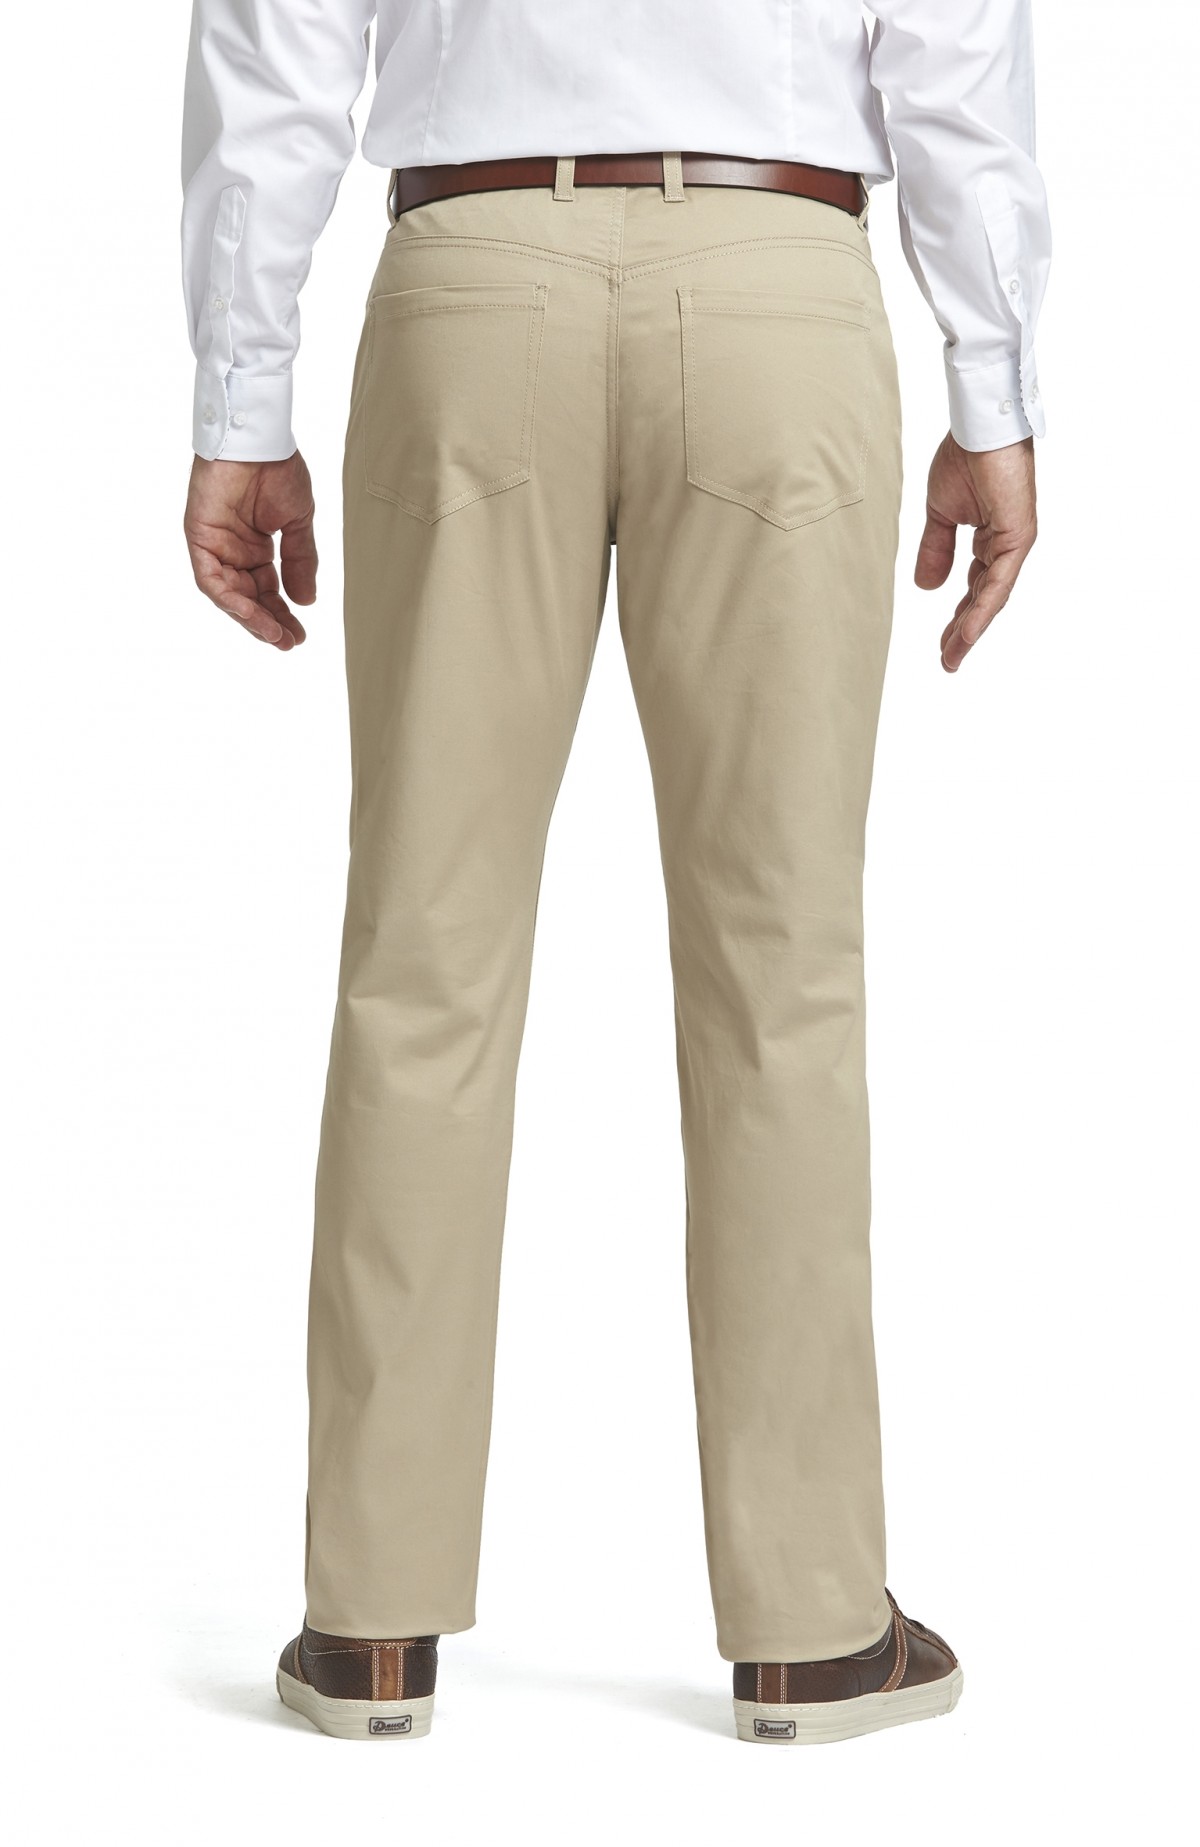 Buy Men's 5 Pocket Workwear Trouser in NZ | The Uniform Centre